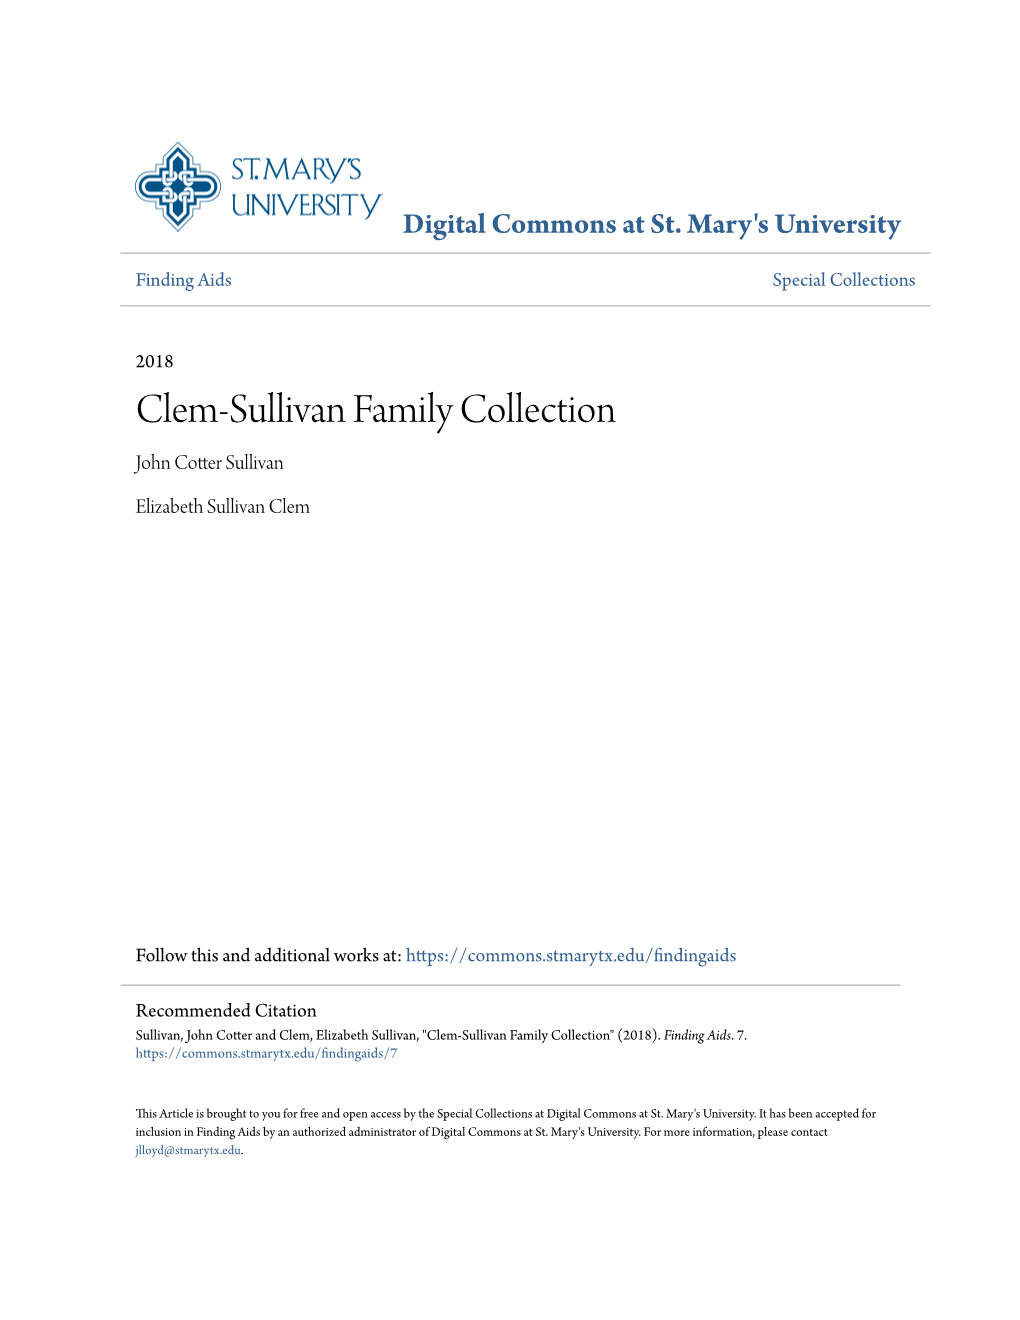 Clem-Sullivan Family Collection John Cotter Sullivan